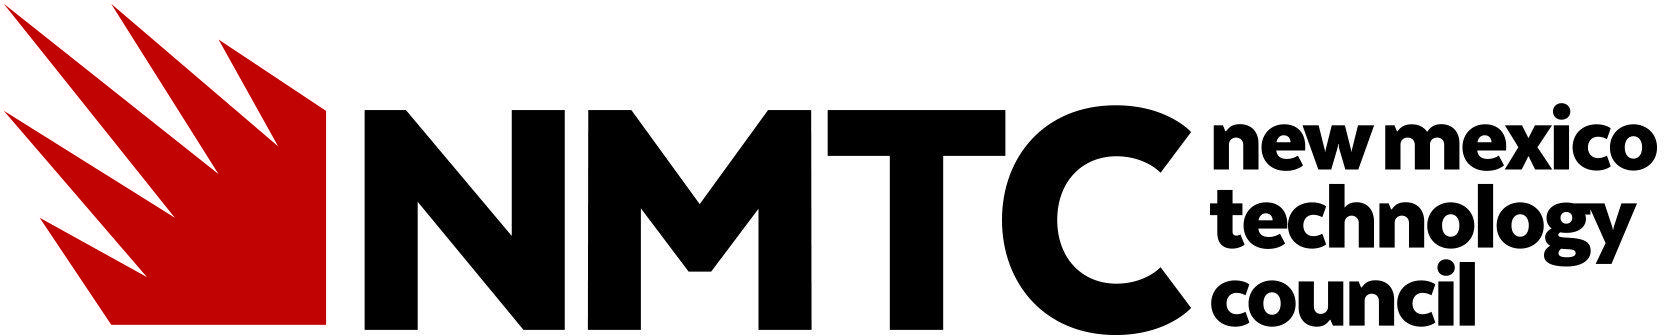 Nmtsc Logo - NMTC Logo Horizontal Mexico Technology Council